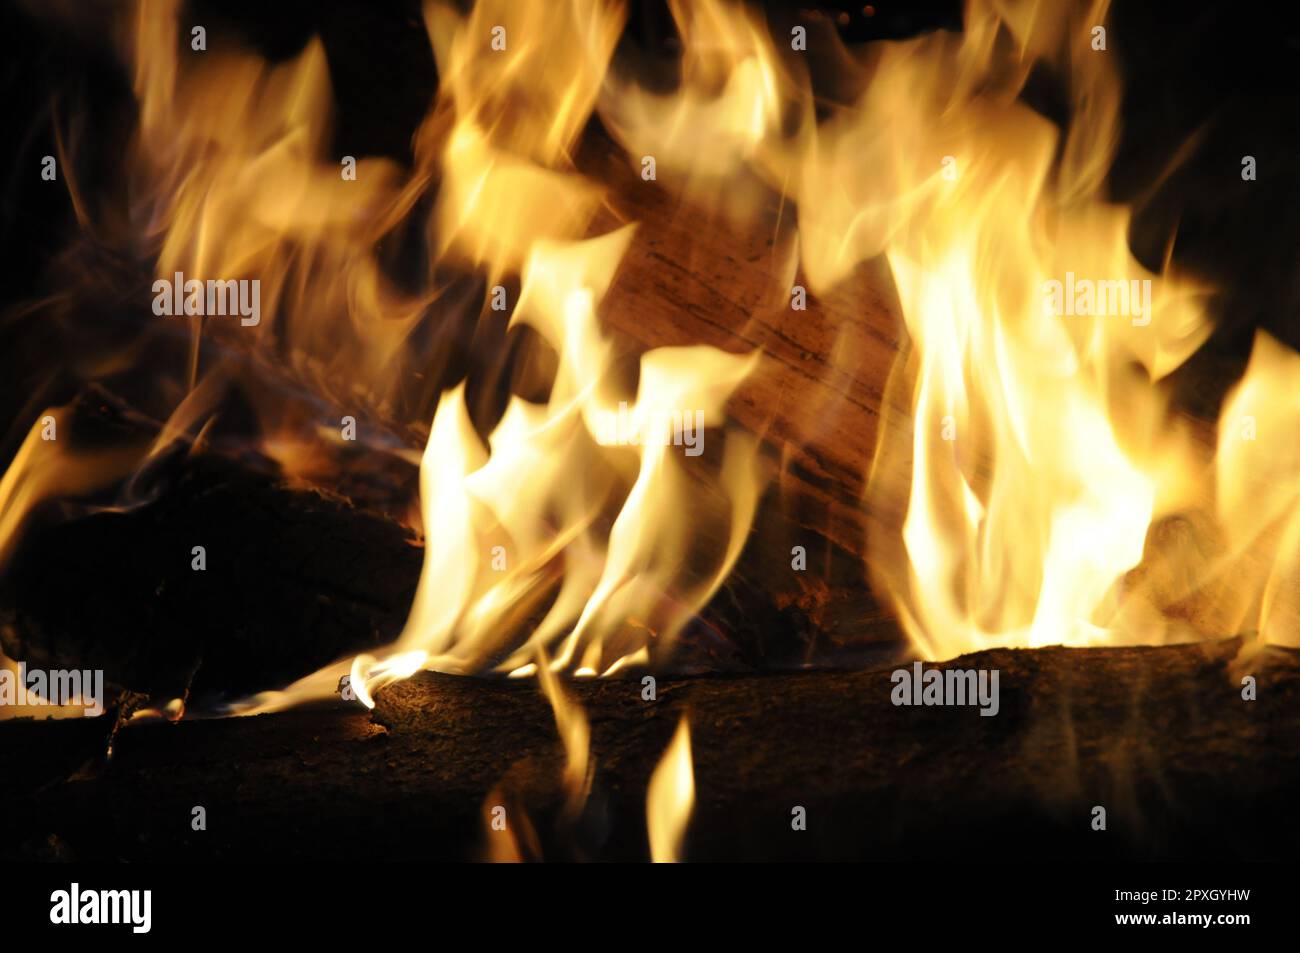 Brennendes Holz, holz, brennen, feuer, marque, brennholz, lodern, lodernd, brennend, flamme, flammen, kaminfeuer Banque D'Images